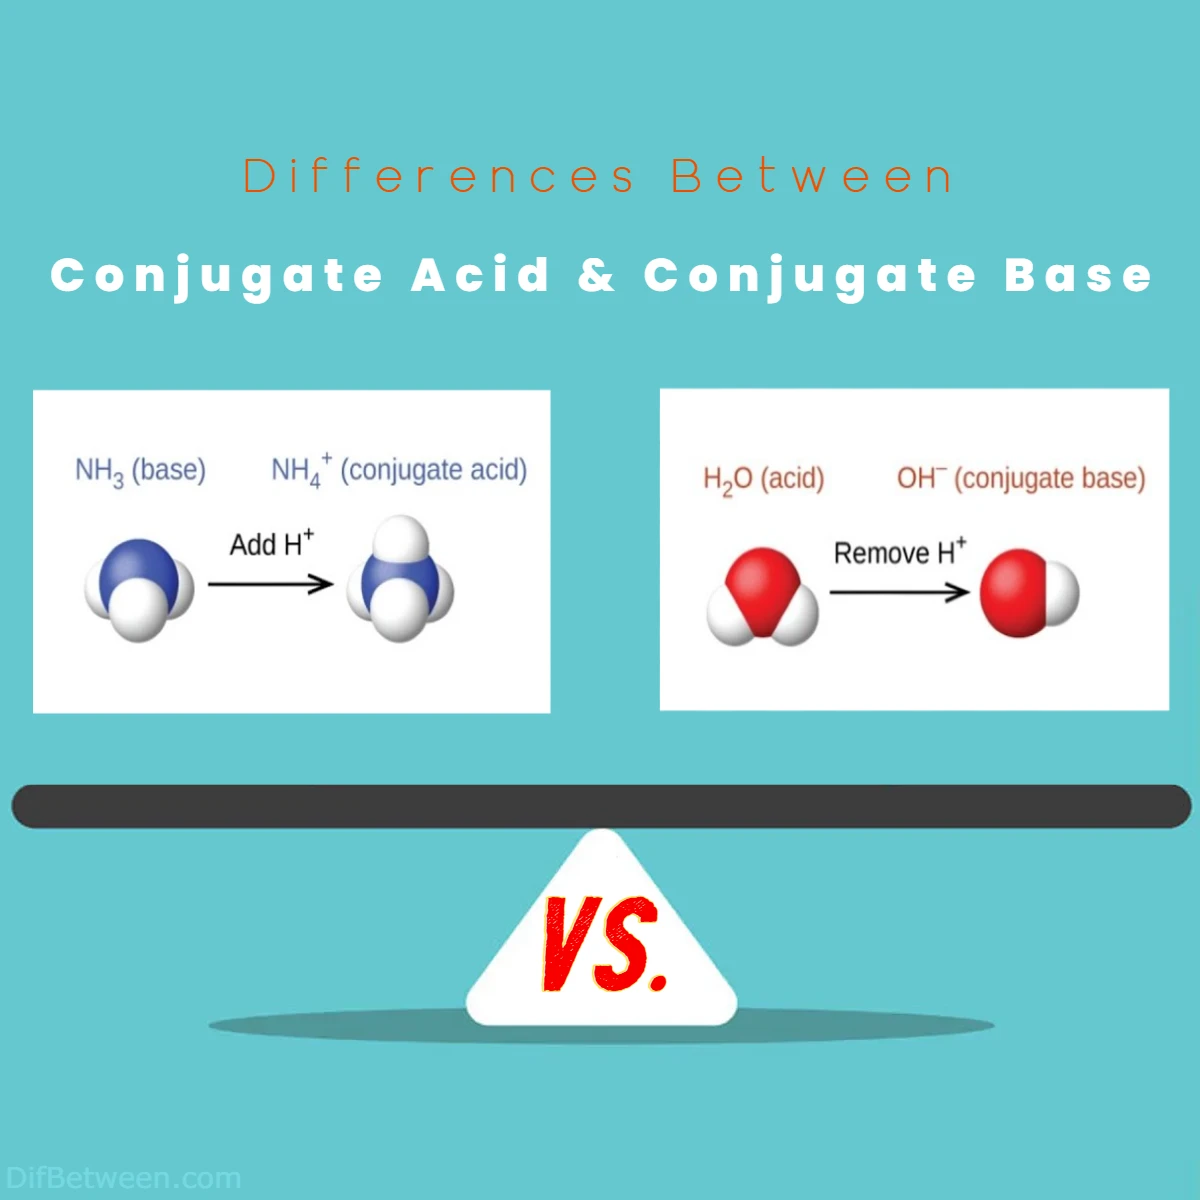 Differences Between Conjugate Acid vs Conjugate Base